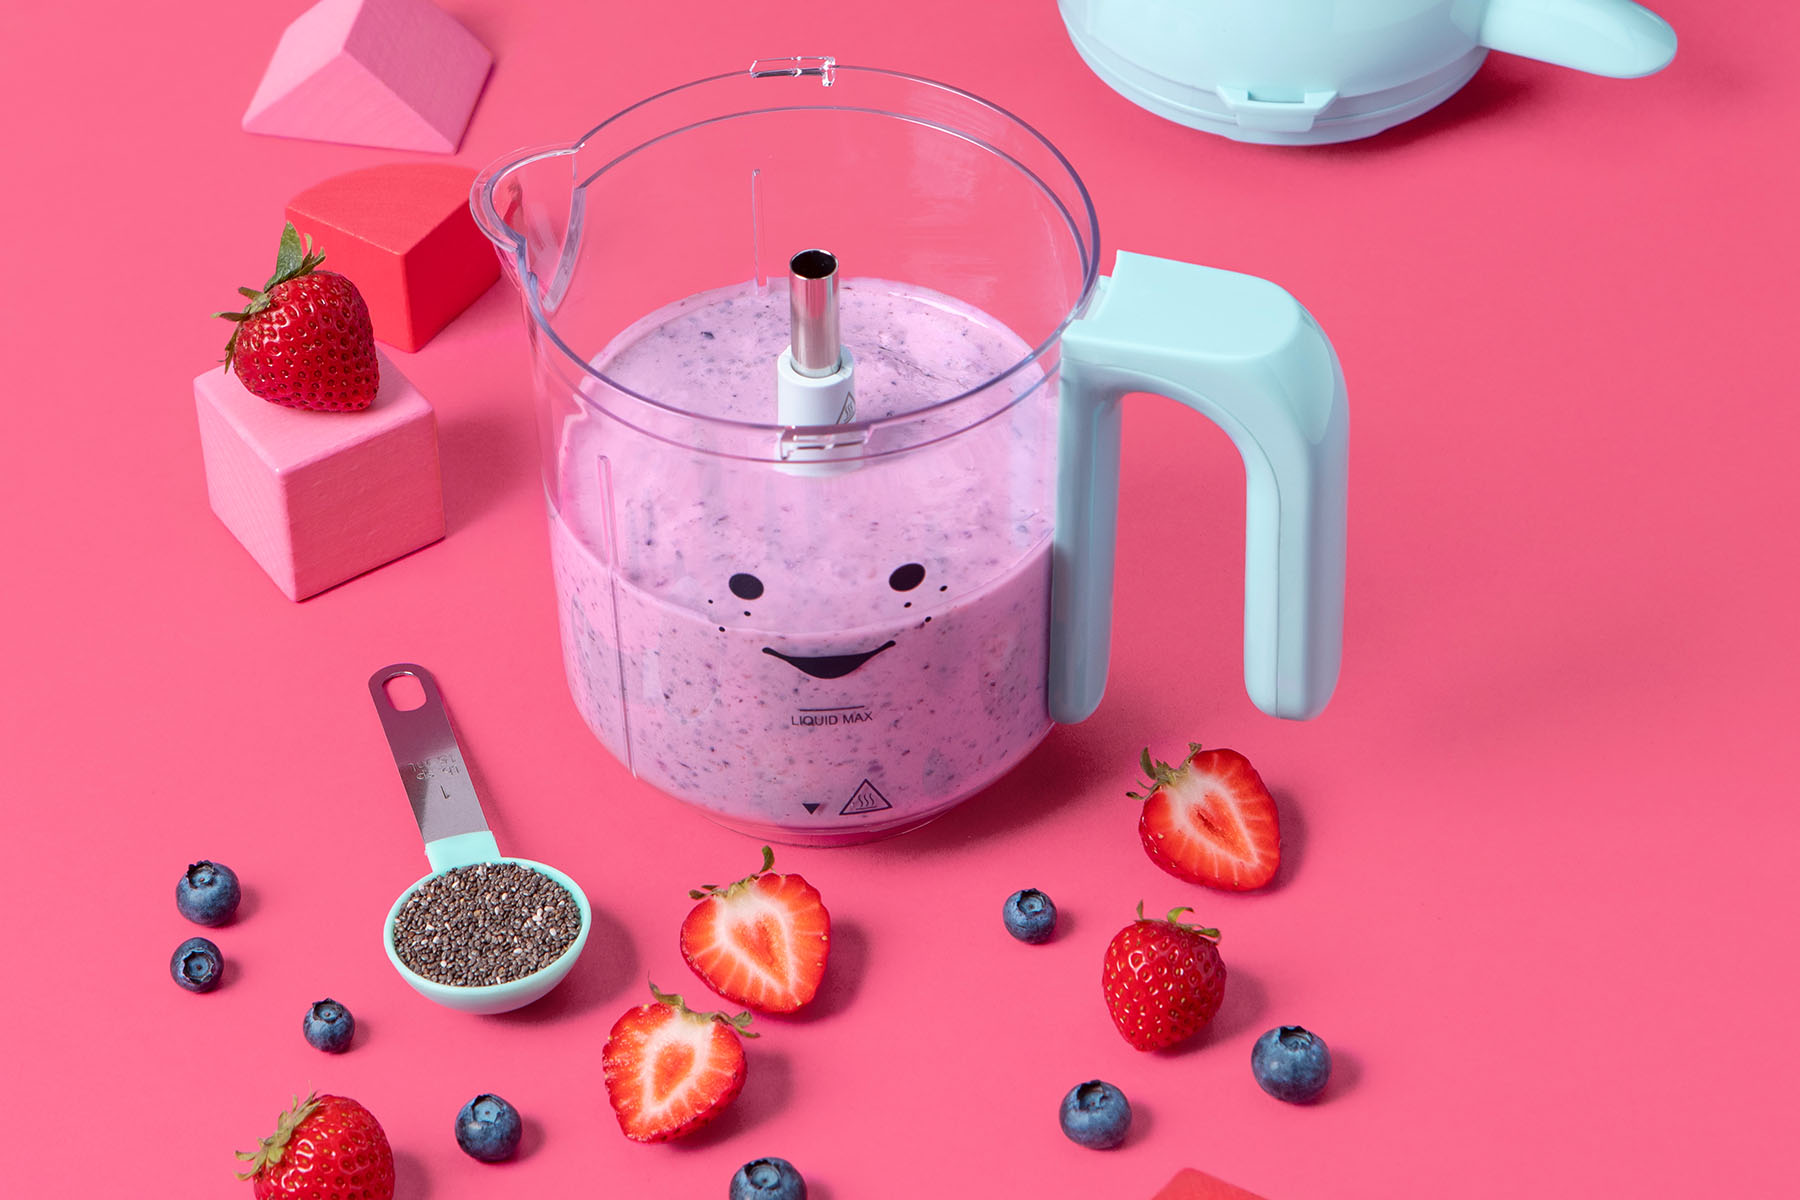 https://capital-brands-llc.imgix.net/recipe-r-yogurt-and-berries-fullsize-1677787615.jpg